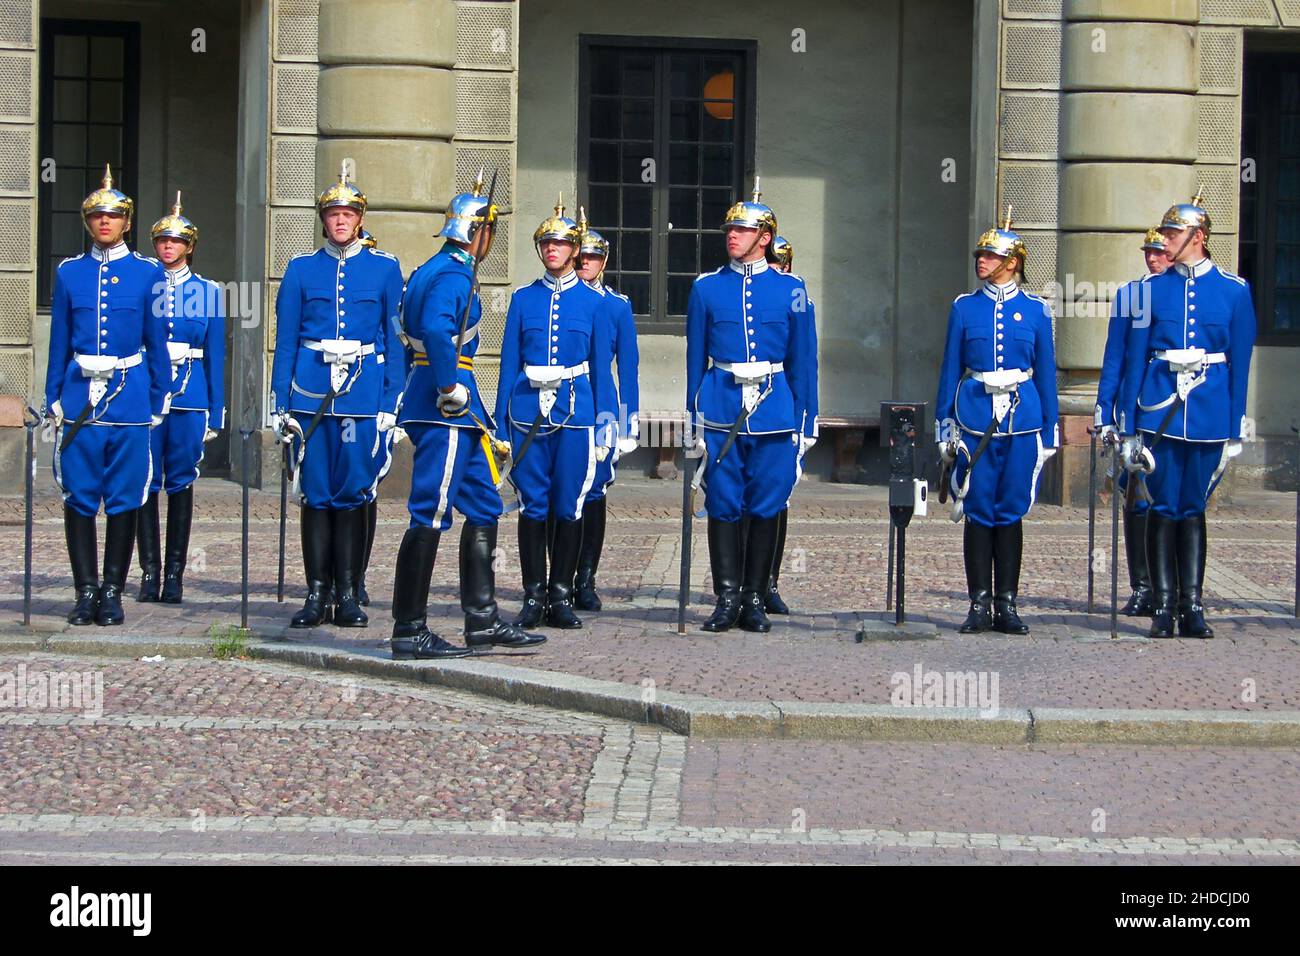 Europa, Skandinavien, Schweden, Stockholm, Wachablösung der Garde am Königspalast, Royal Palace, Königliches Schloss, Stock Photo